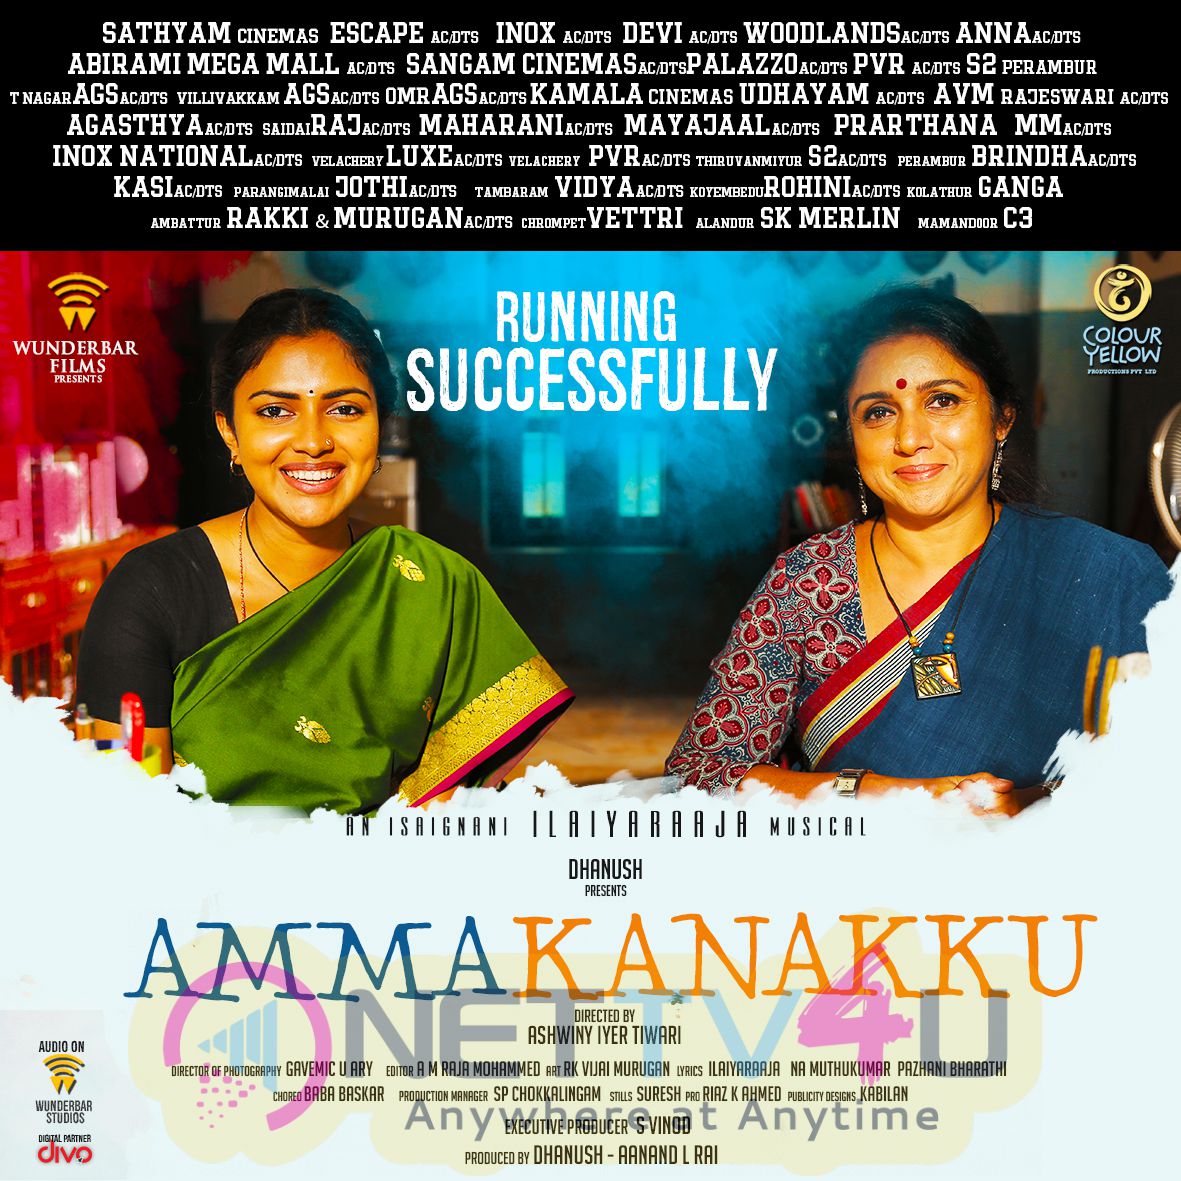 Tamil Movie Amma Kanakku Online Good Looking Poster Tamil Gallery